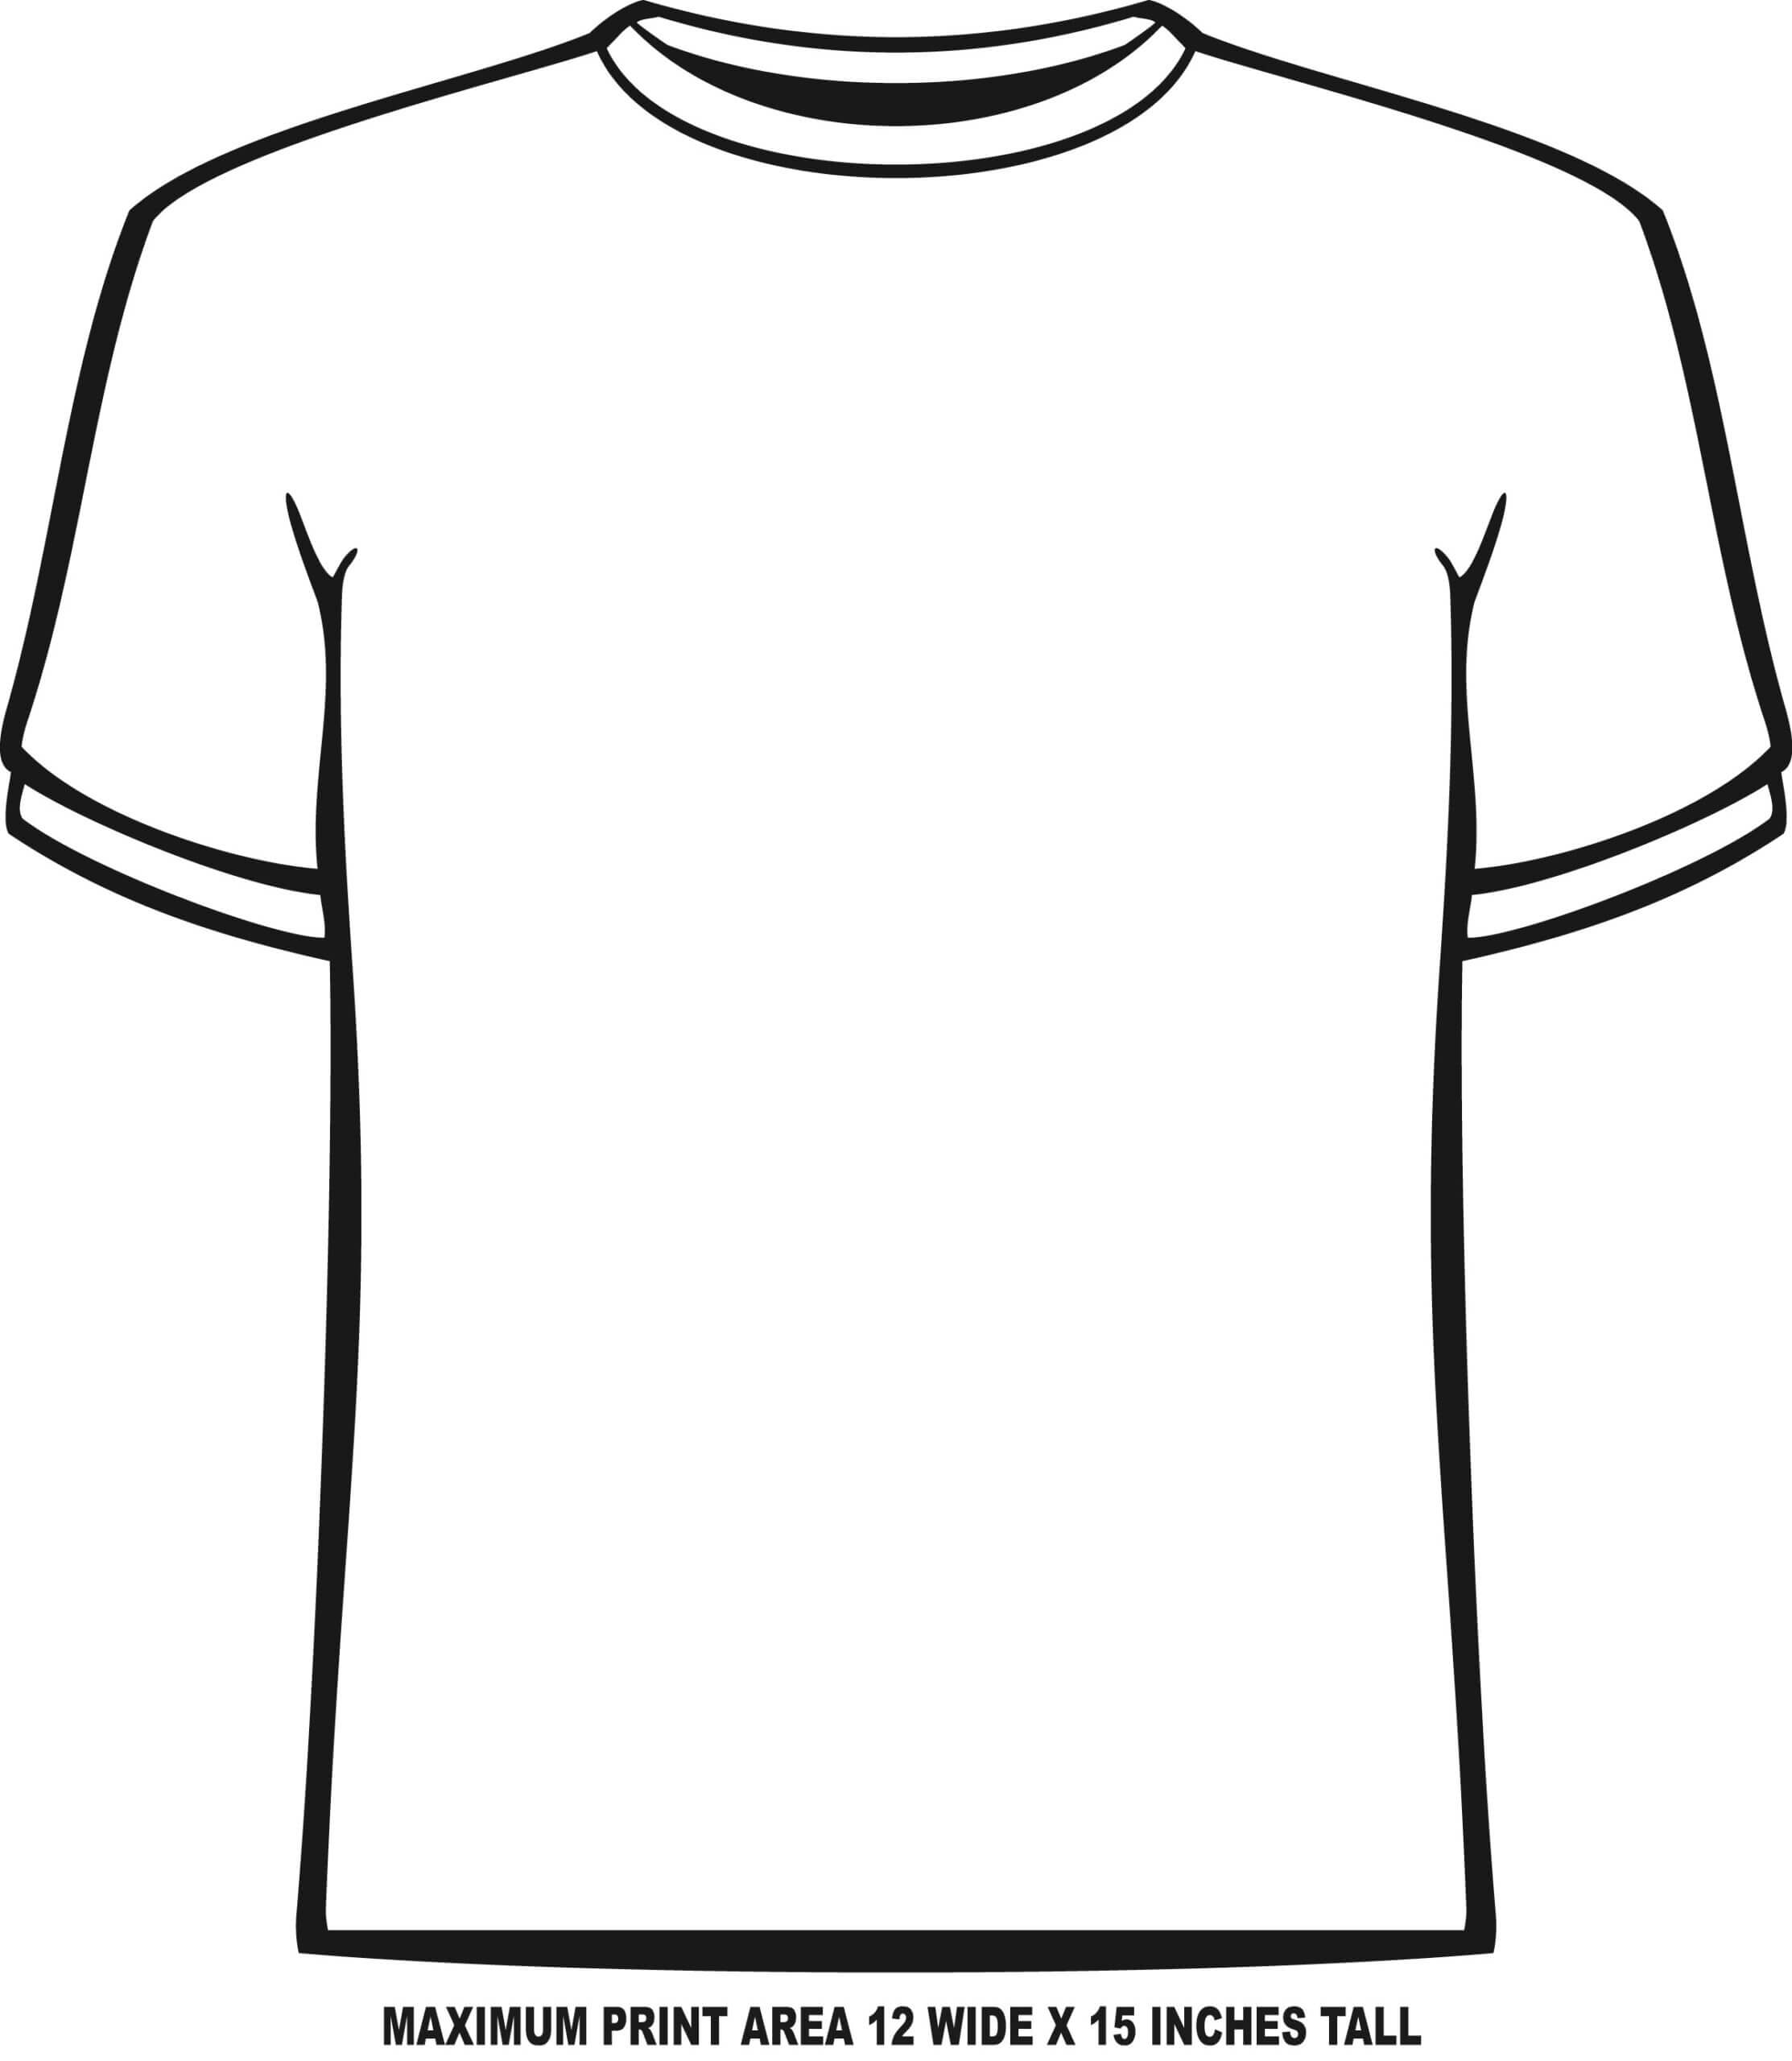 Blank Tshirt Template Pdf Dreamworks With Blank Tshirt Template Pdf 